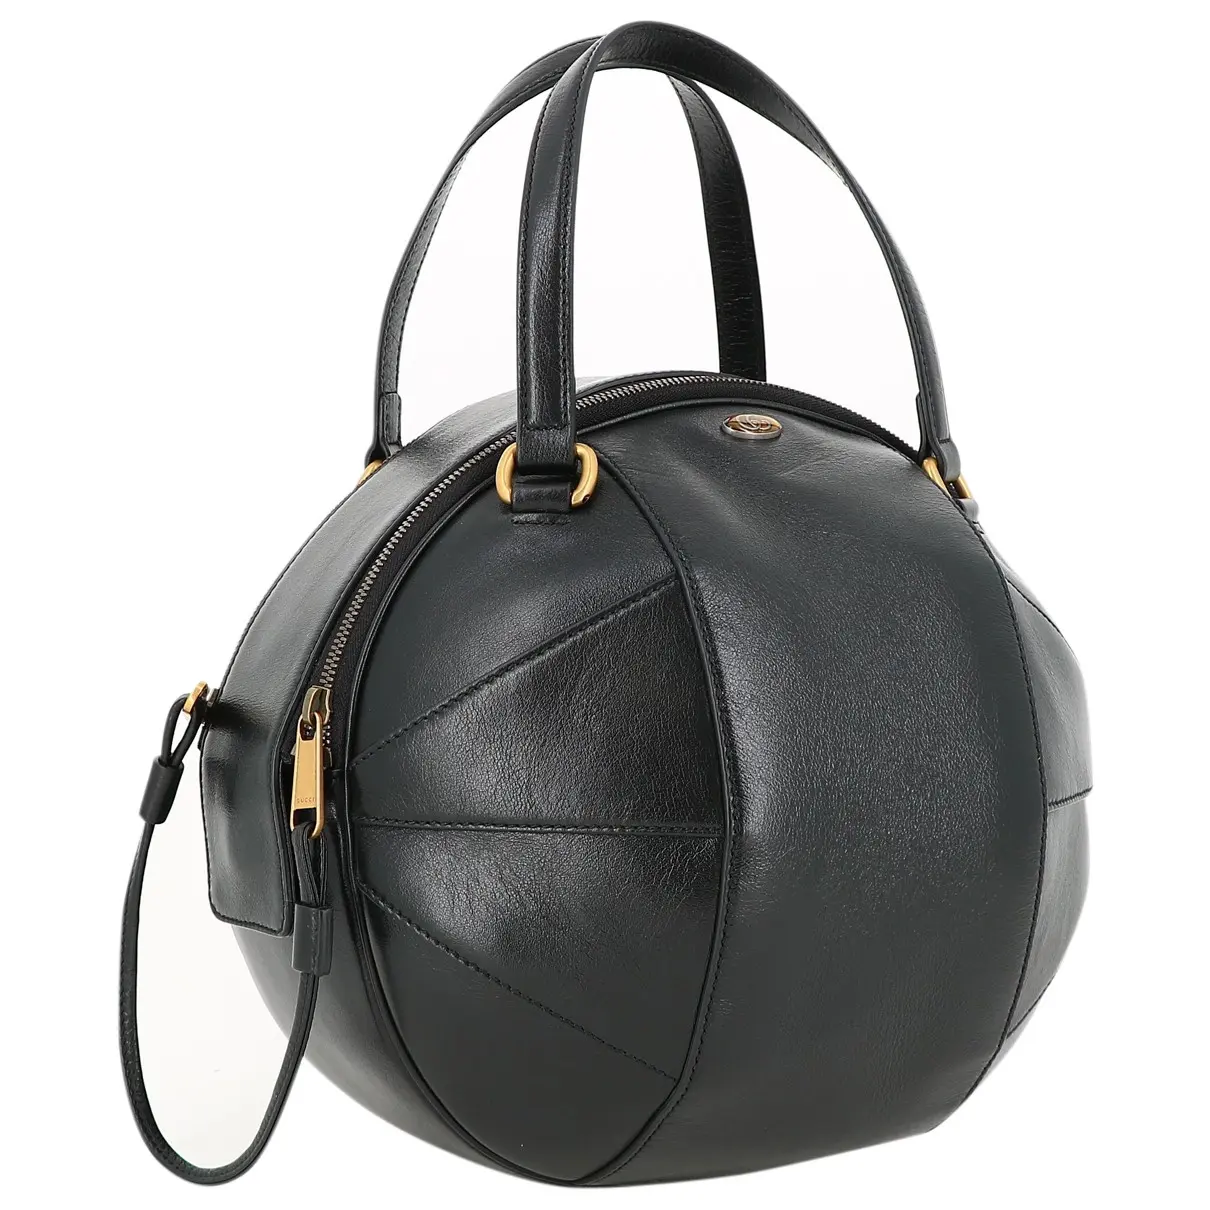 Tifosa leather handbag Gucci